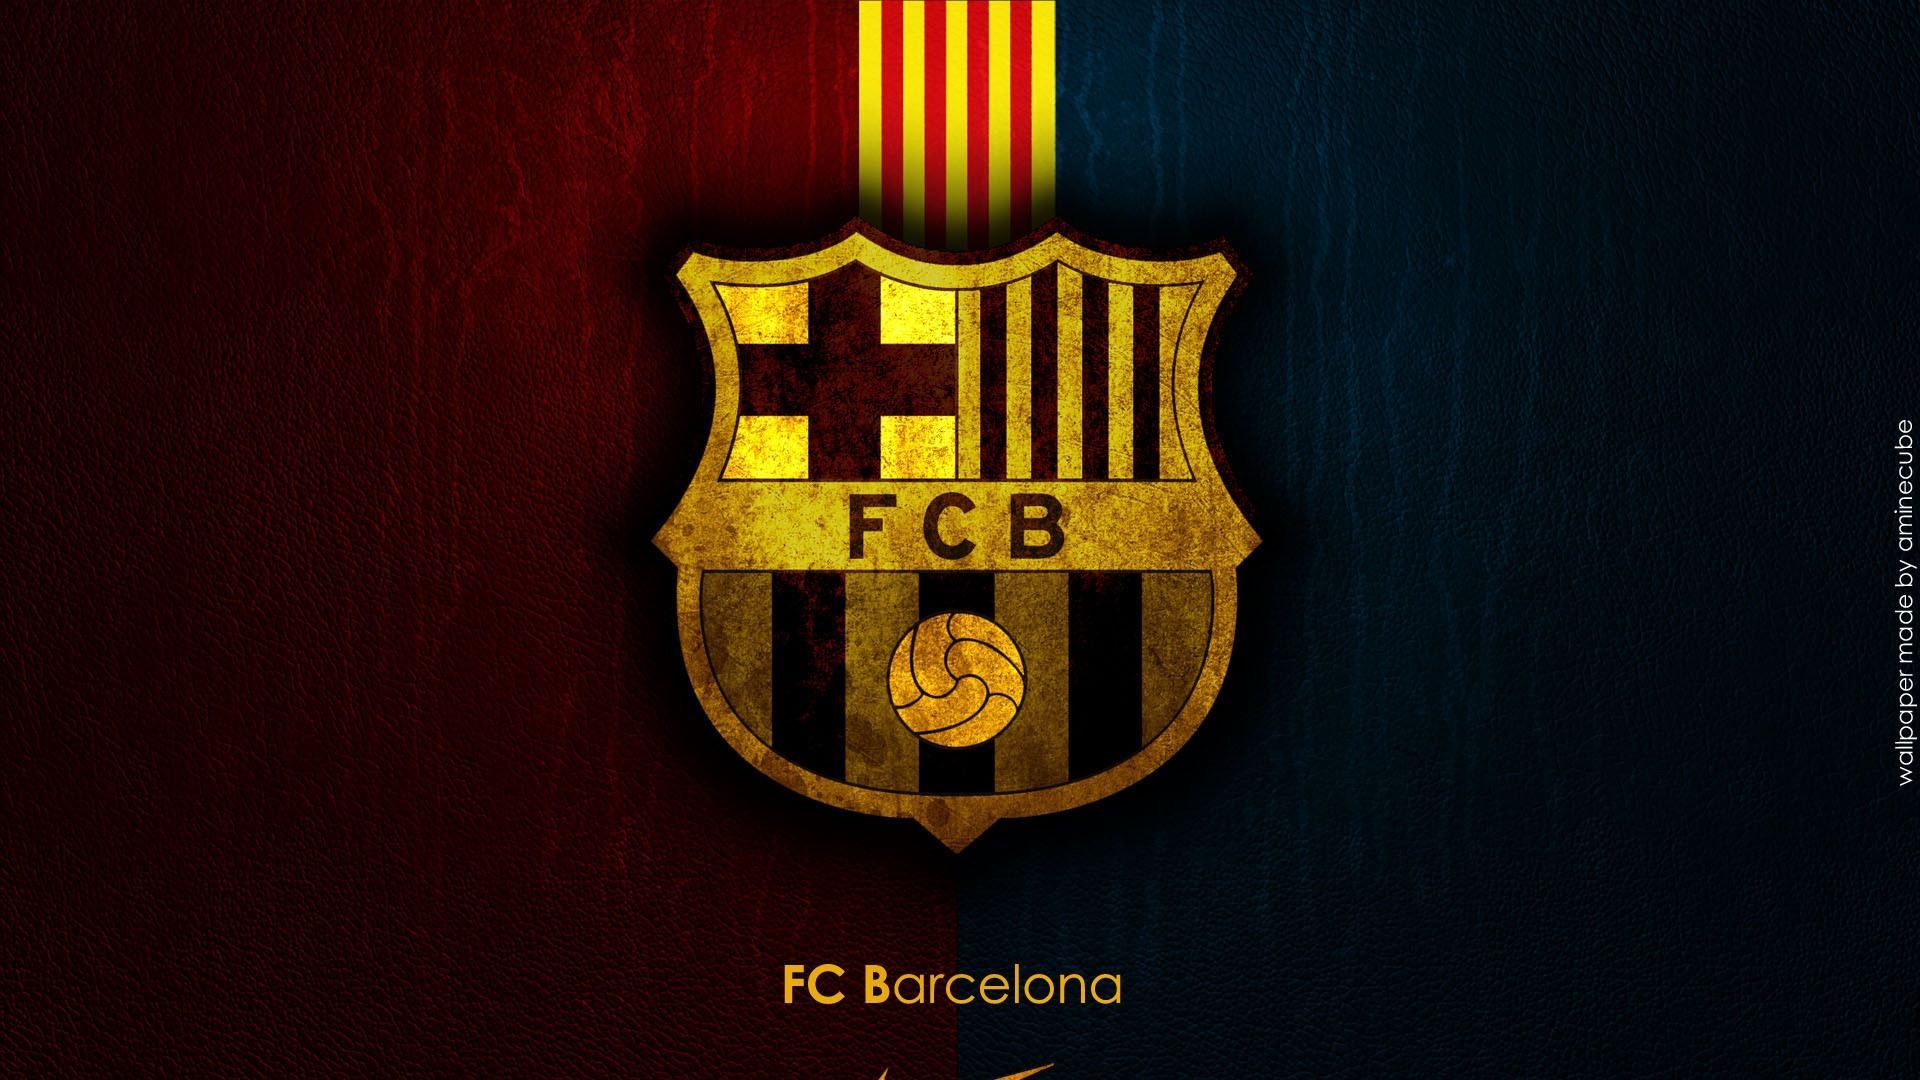 Download Wallpaper 1920x1080 Barcelona, Spain, Football club ...